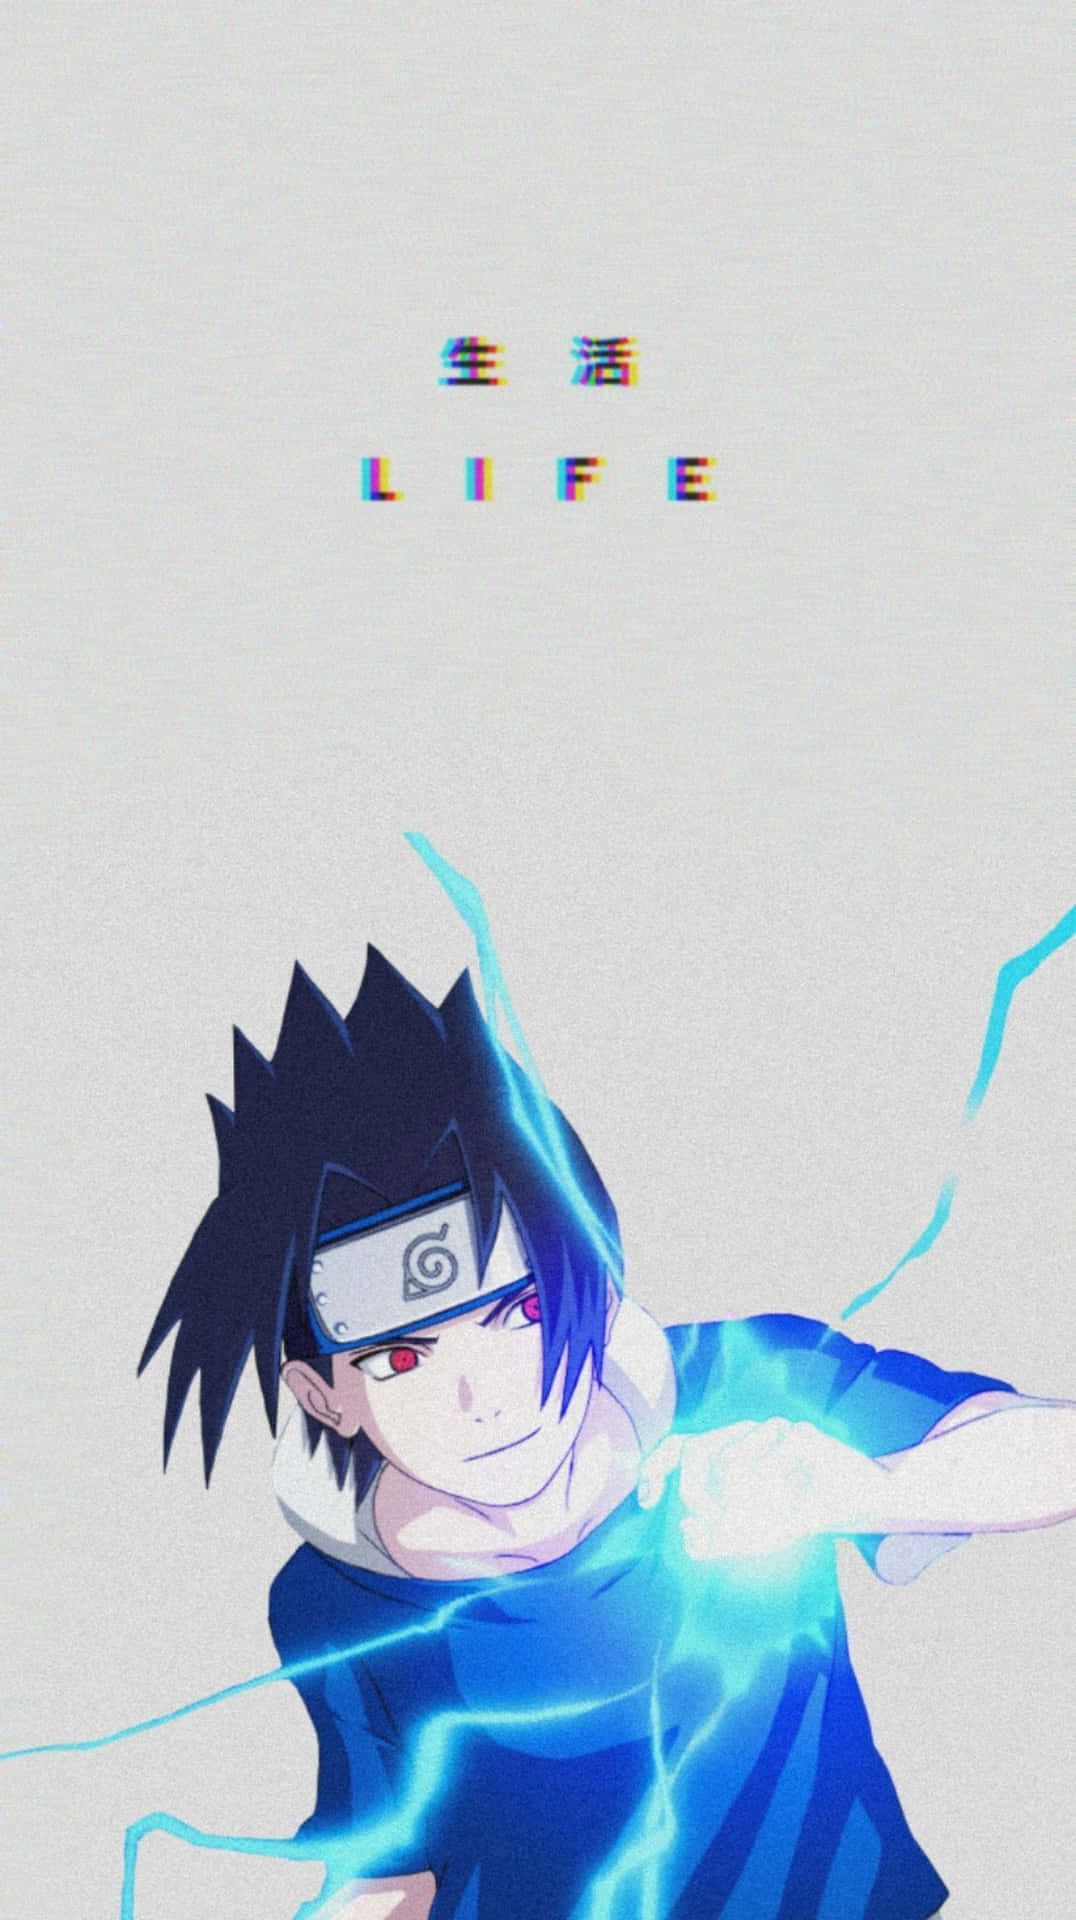 A man with blue hair and lightning in his hand - Sasuke Uchiha